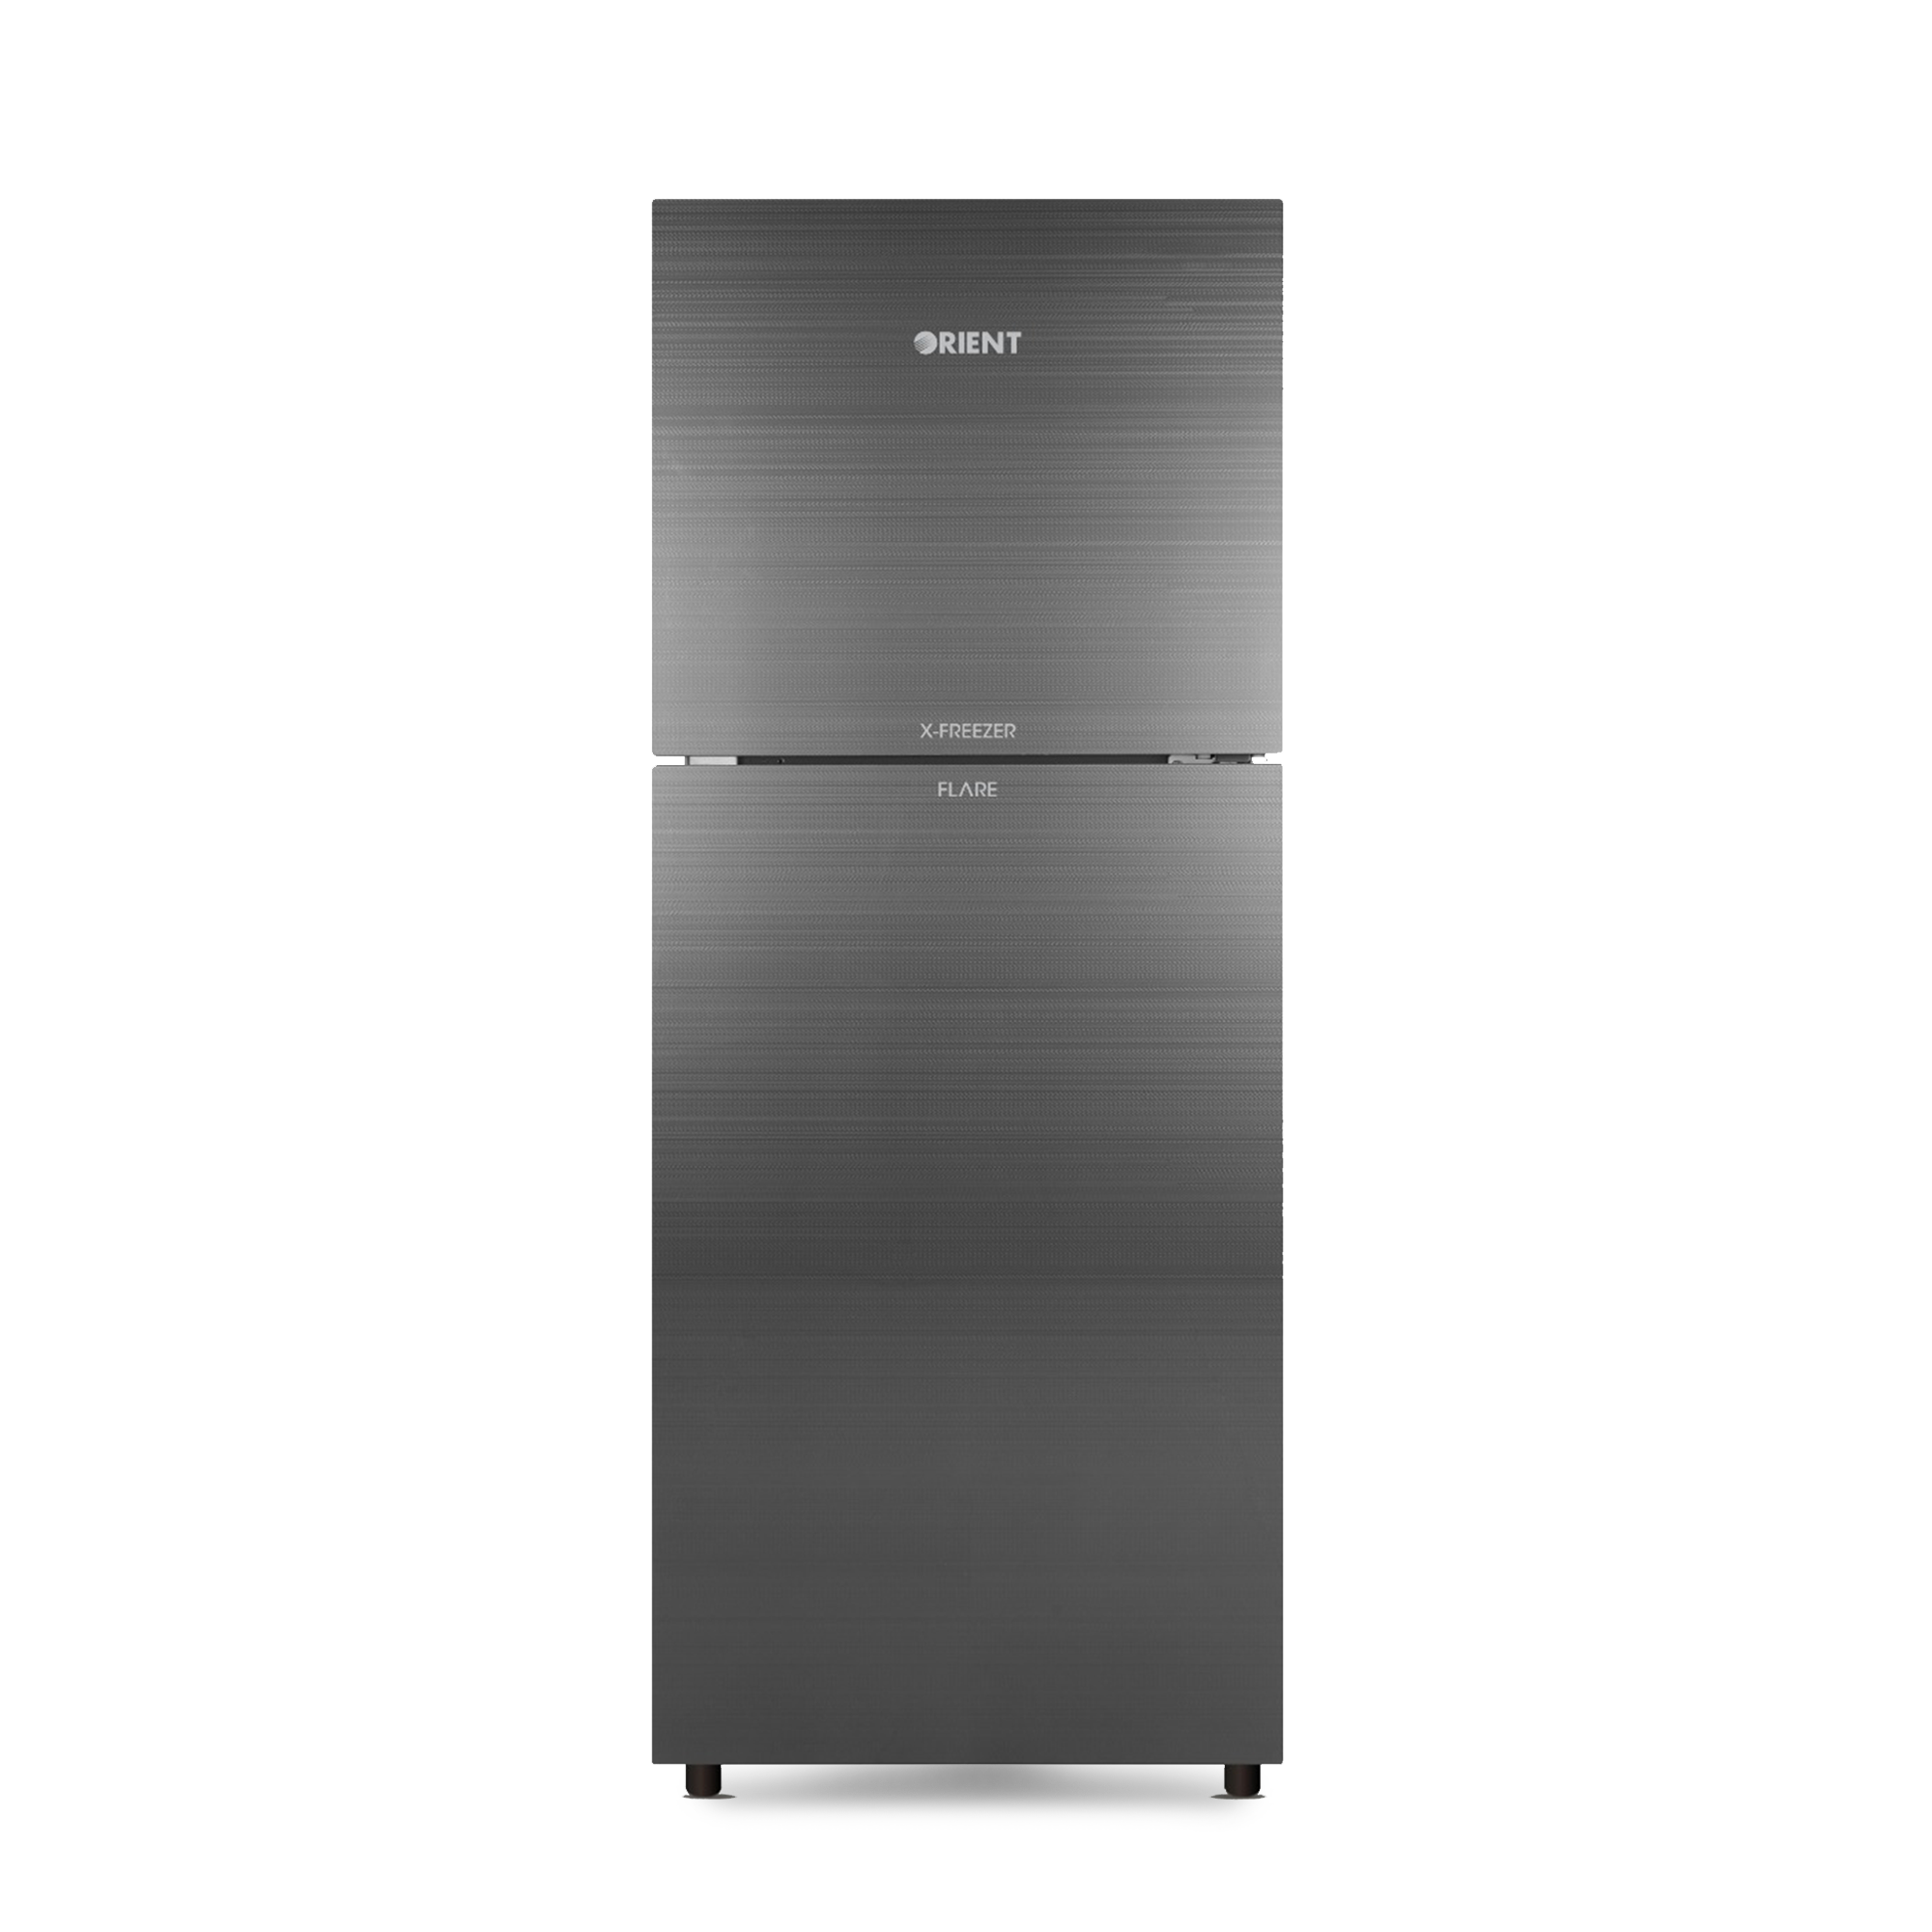 Flare 500 Liters Refrigerator